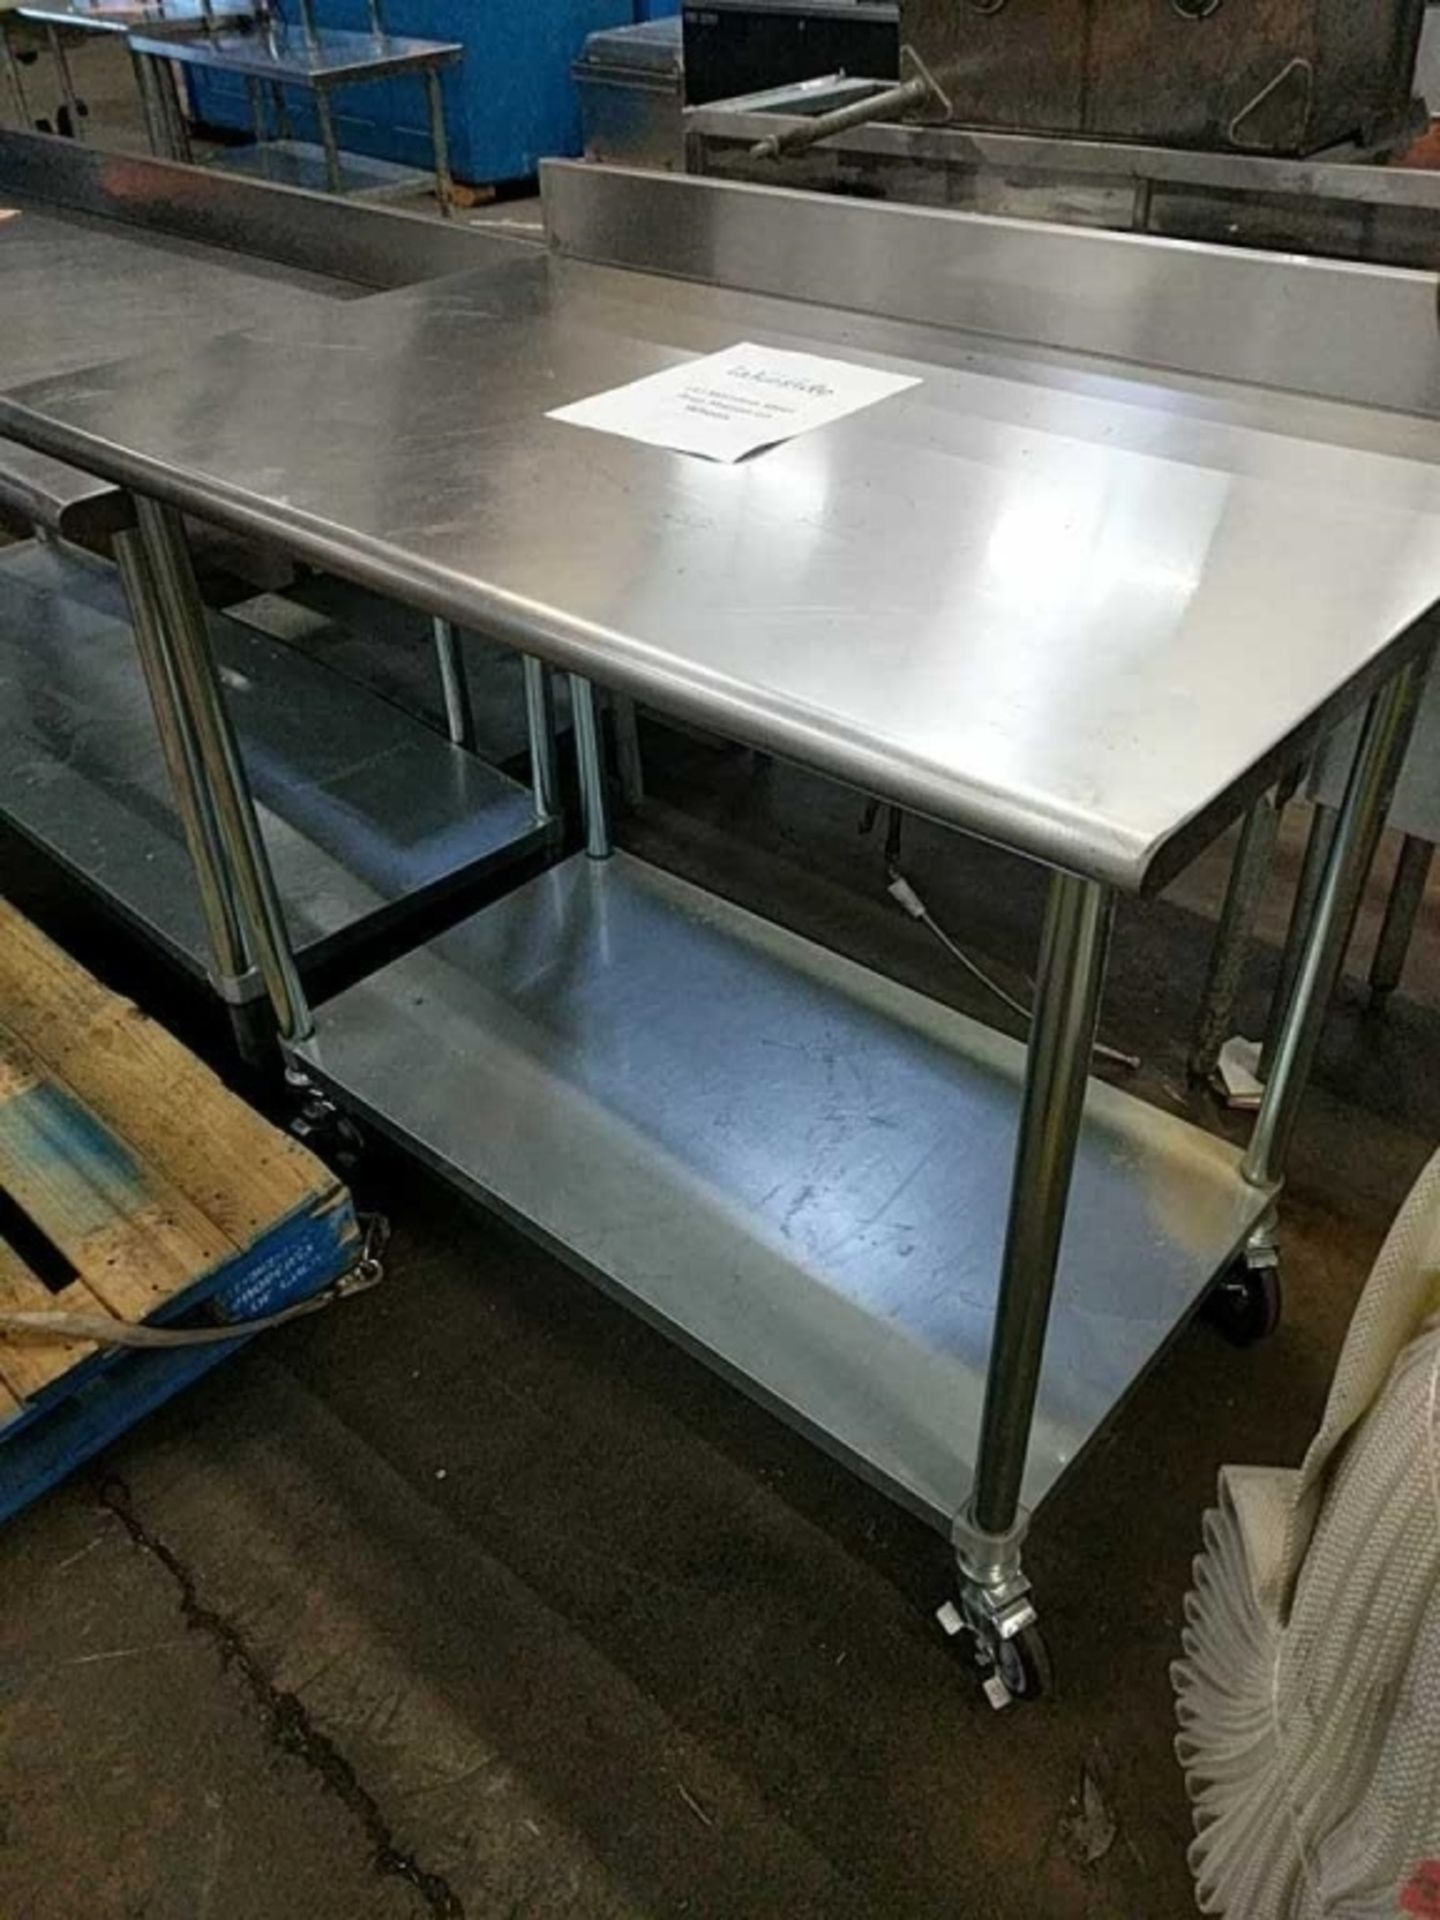 Stainless Steel Prep Table on Wheels - Image 2 of 2